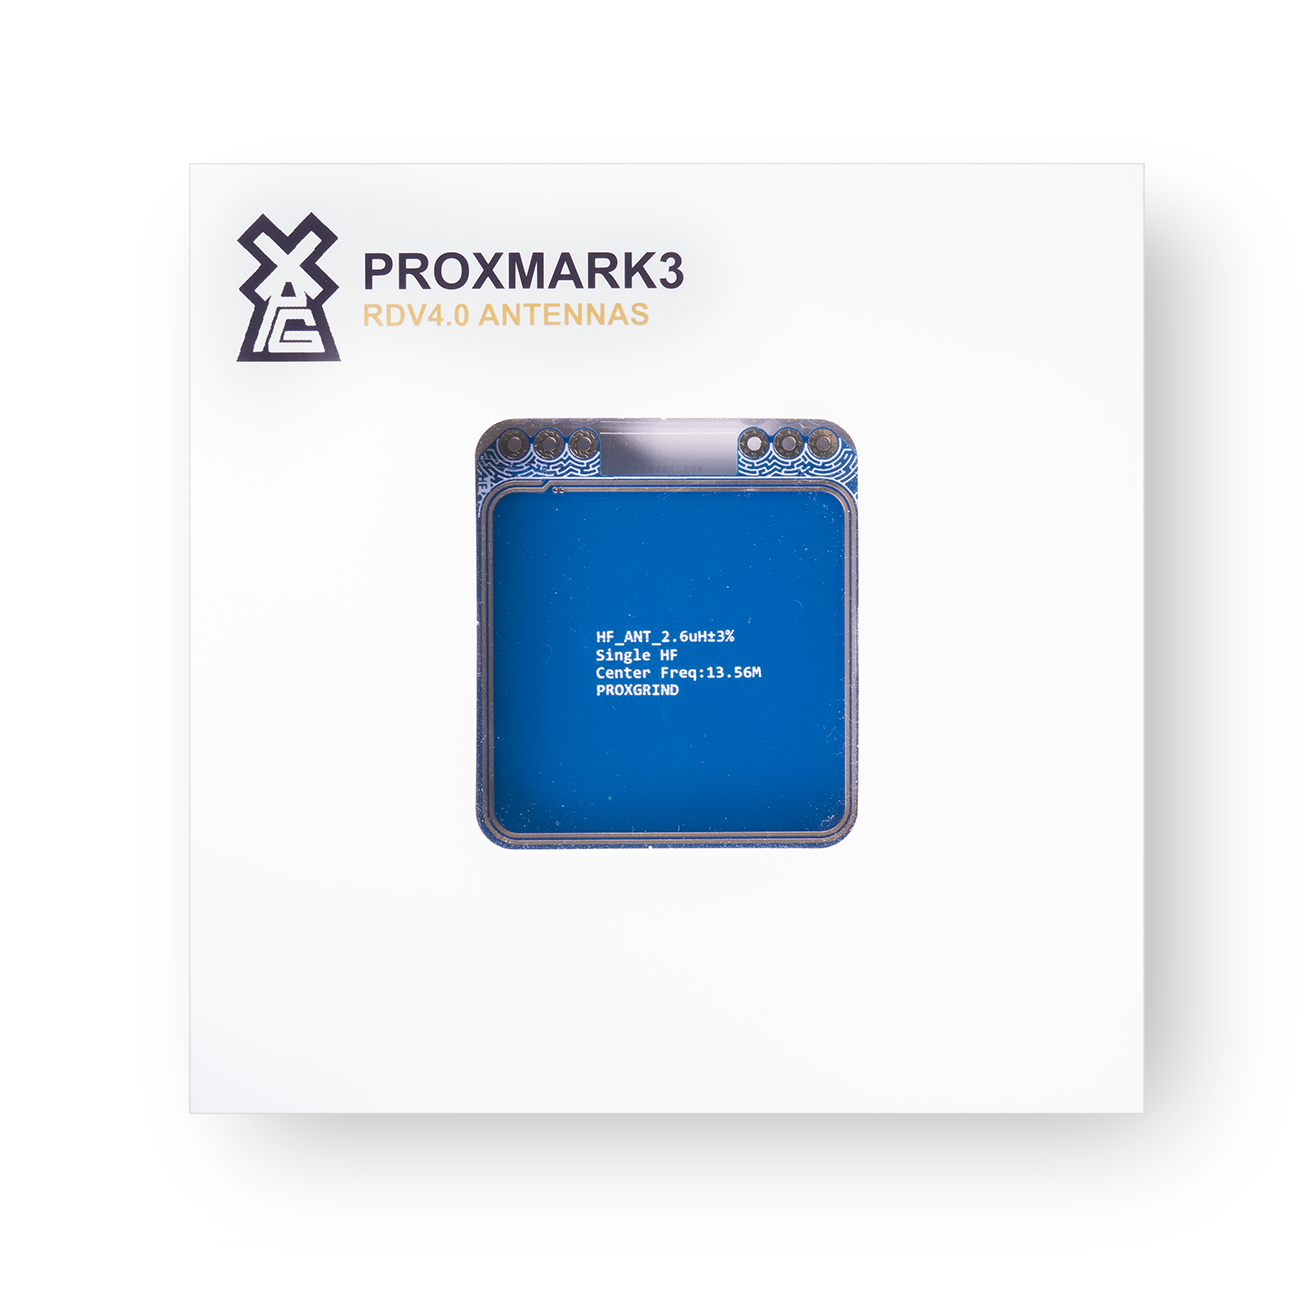 Proxmark3 RDV4.01 Long Range HF Antenna Set